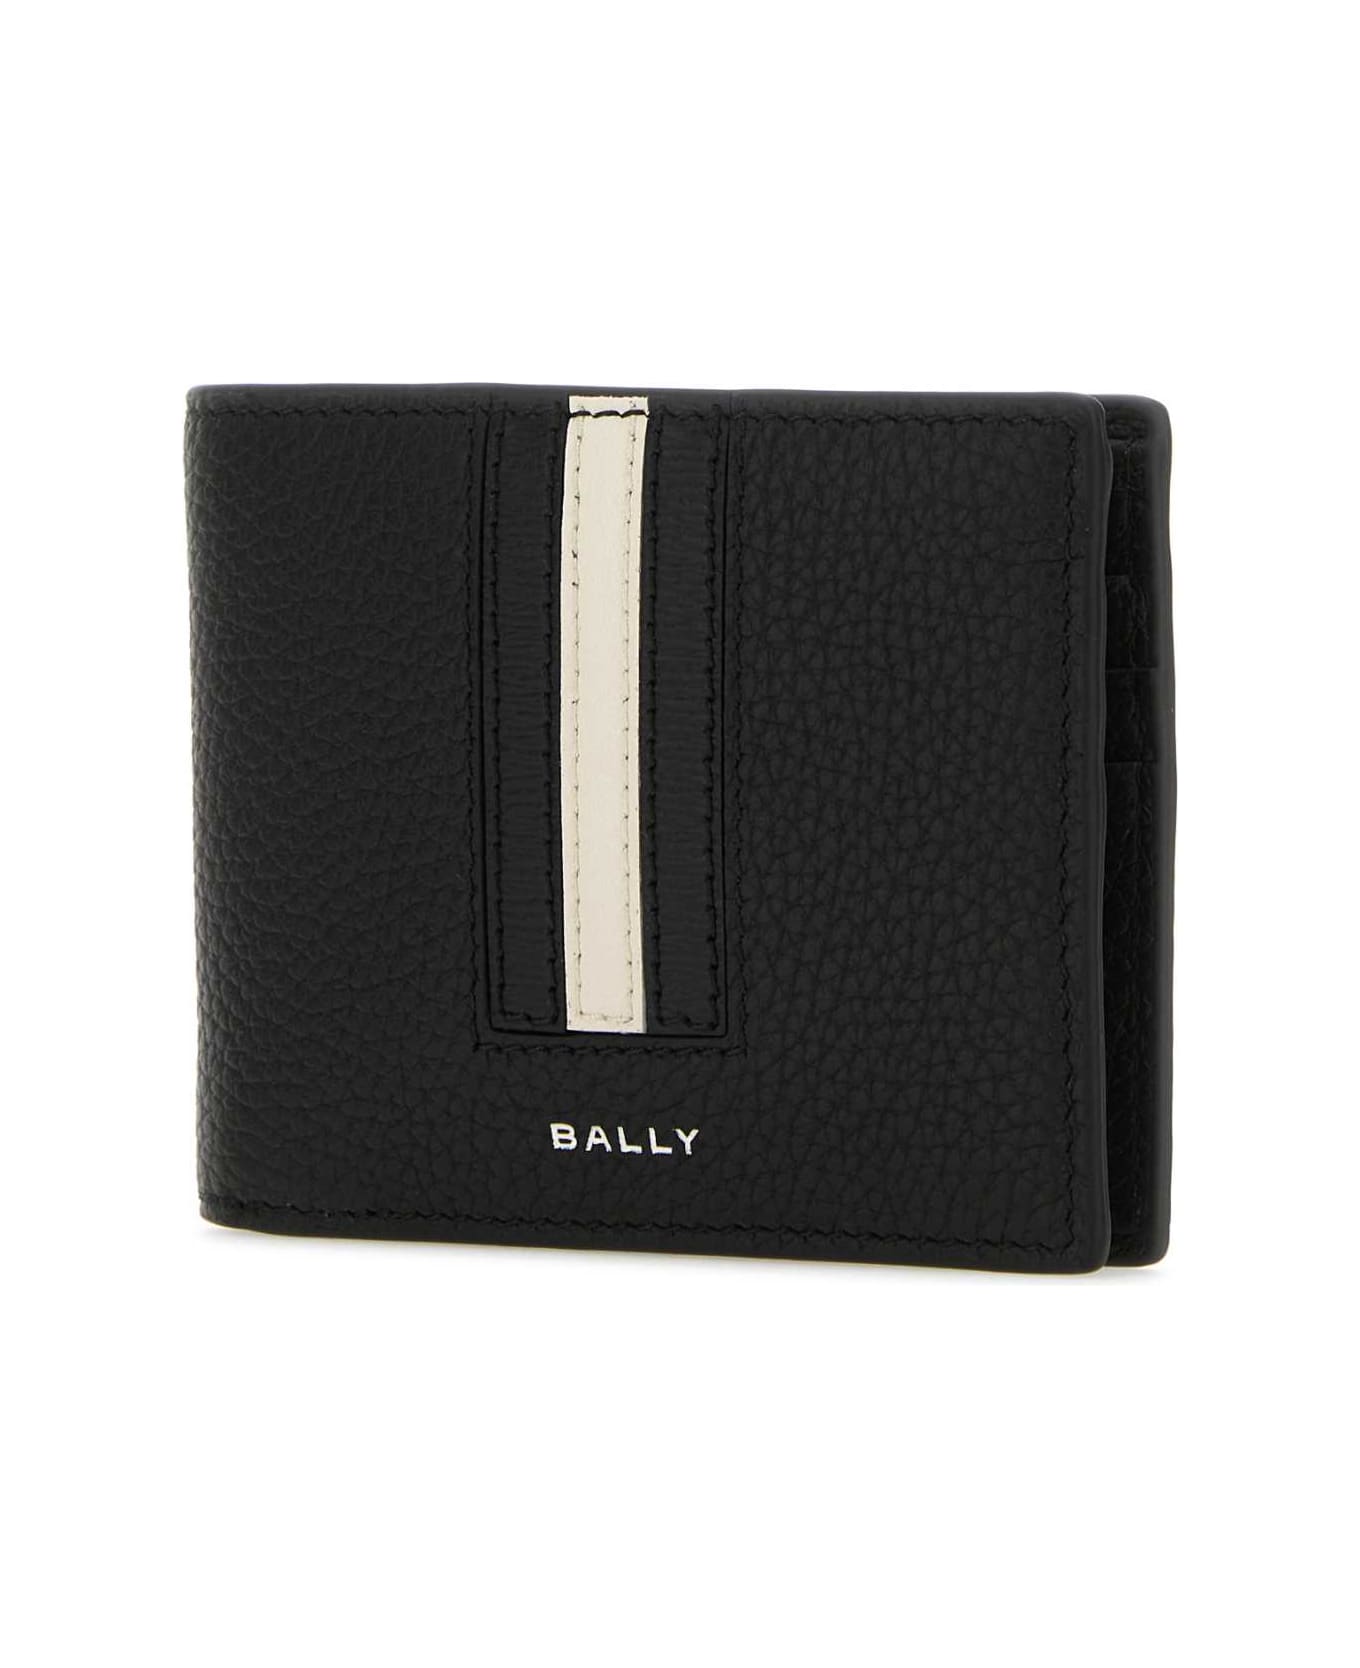 Bally Black Leather Wallet - BLACKPALLADIO